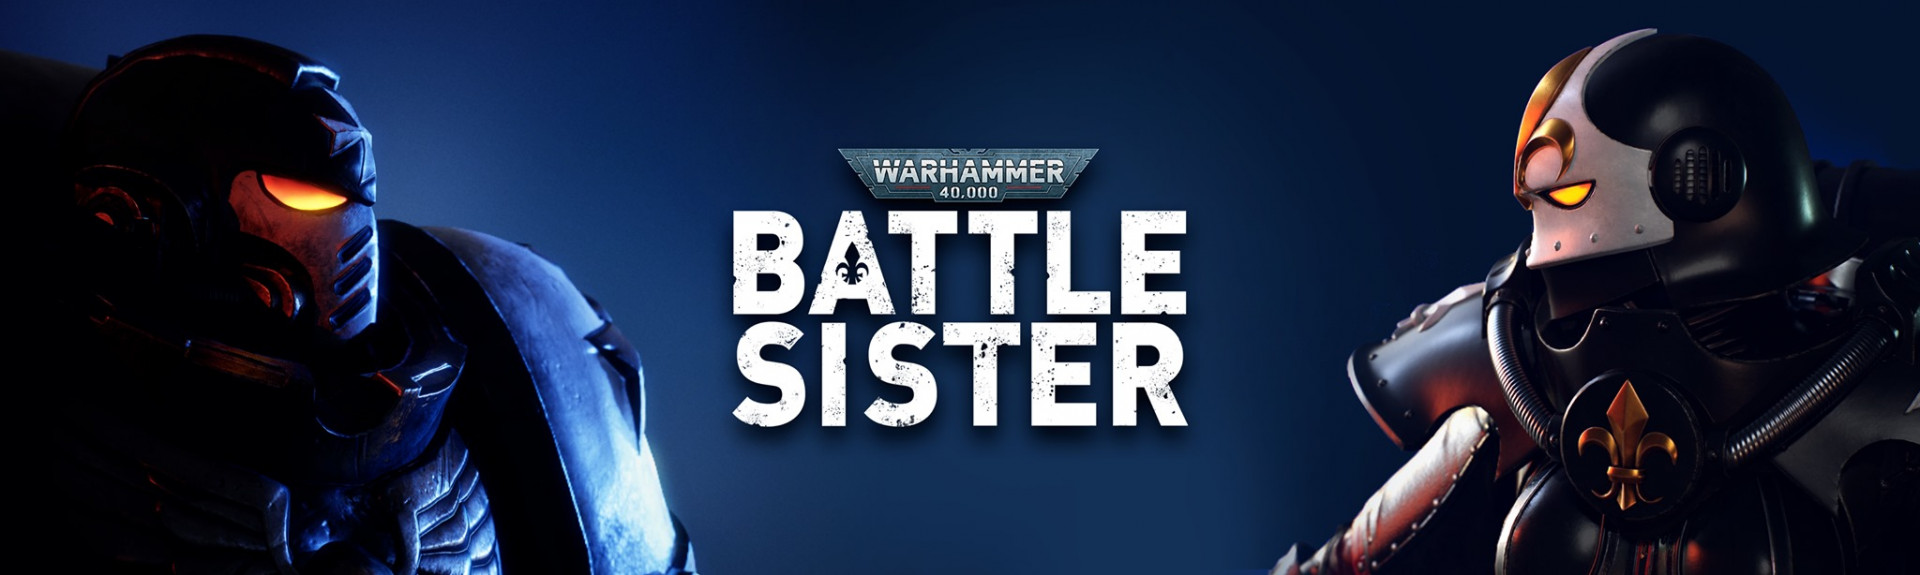 Warhammer 40,000: Battle Sister - ANÁLISIS